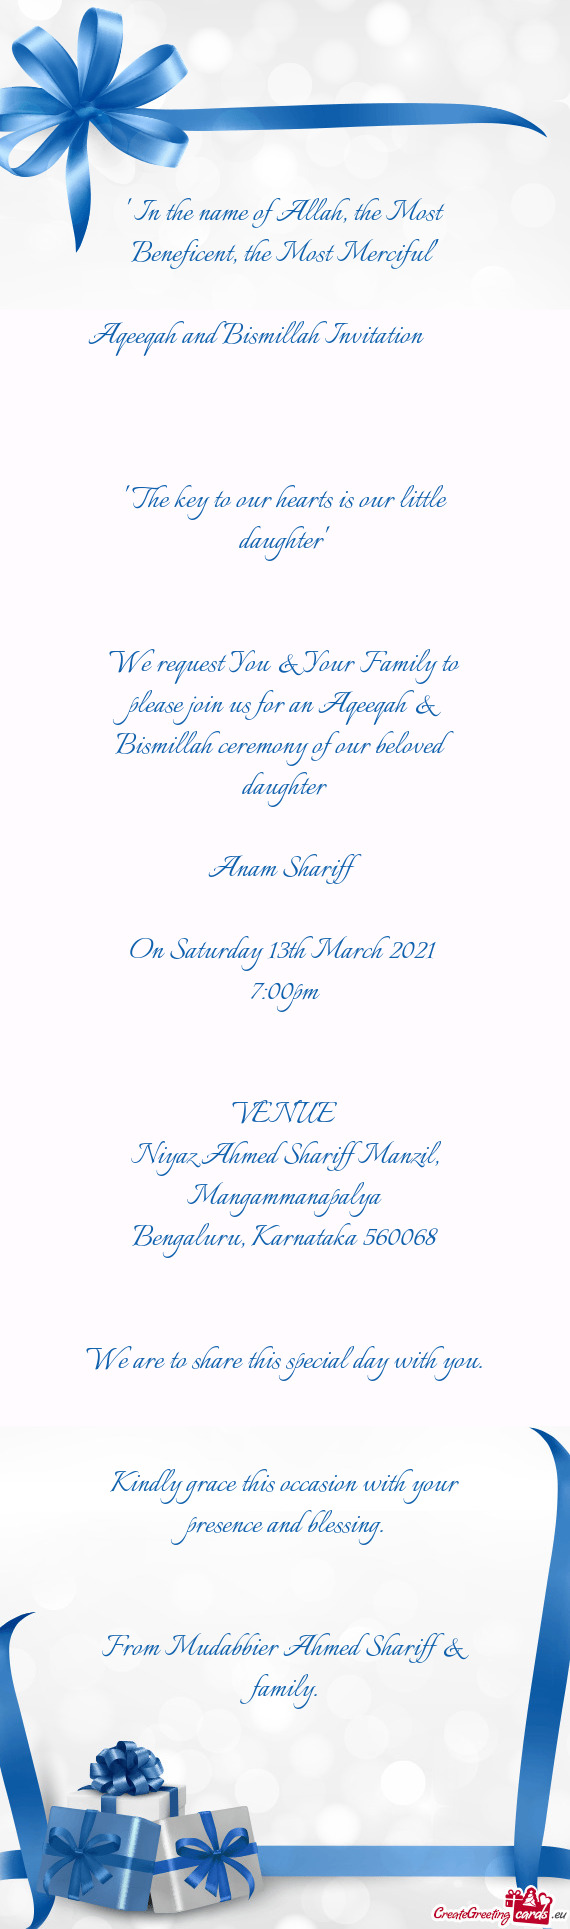 Aqeeqah and Bismillah Invitation